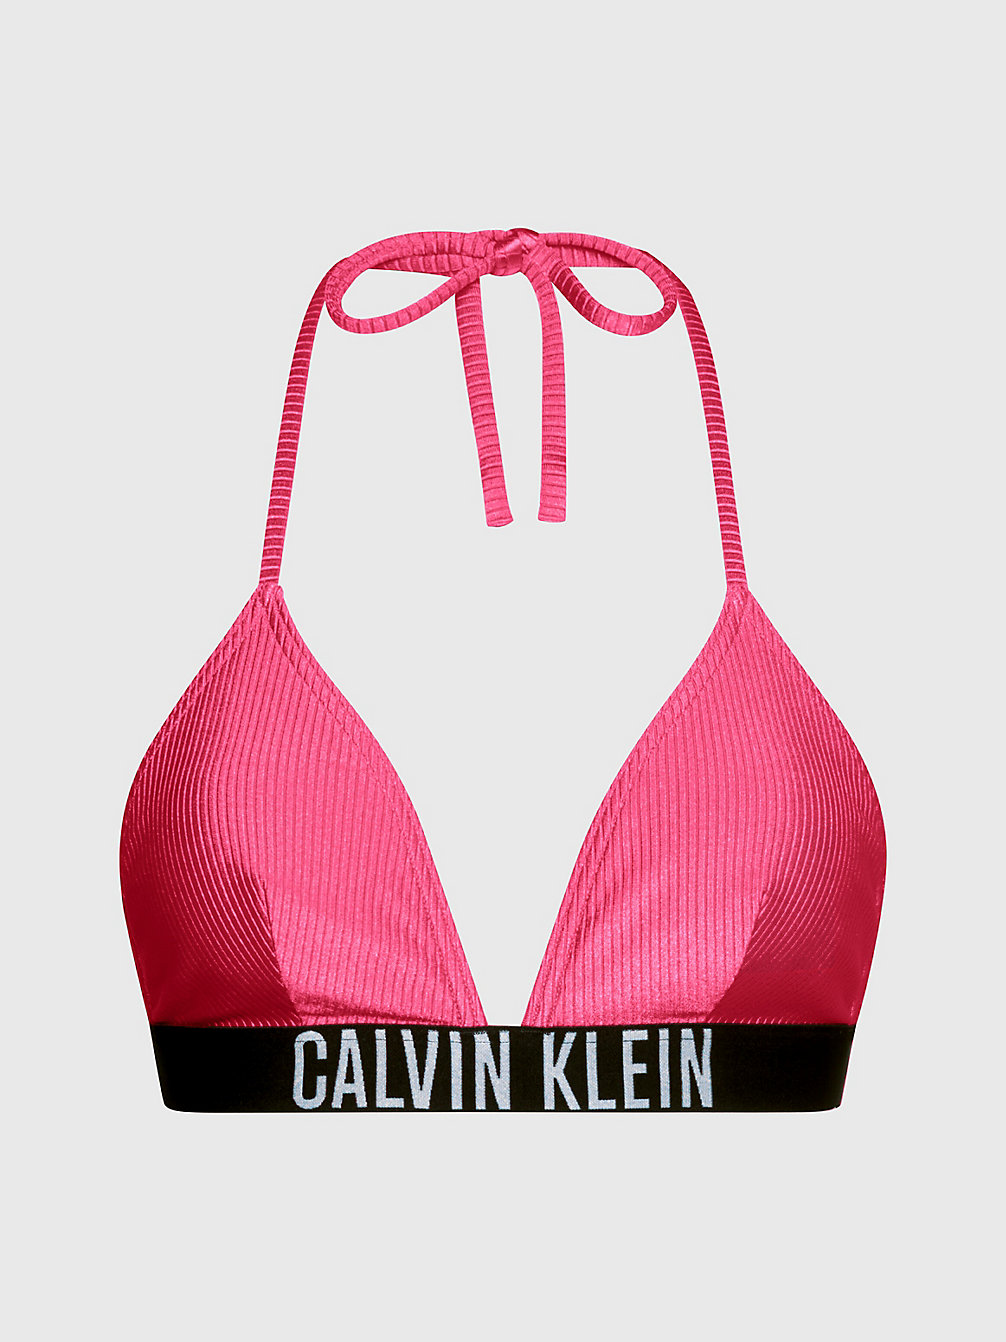 Top Bikini A Triangolo - Intense Power > PINK FLASH > undefined donna > Calvin Klein